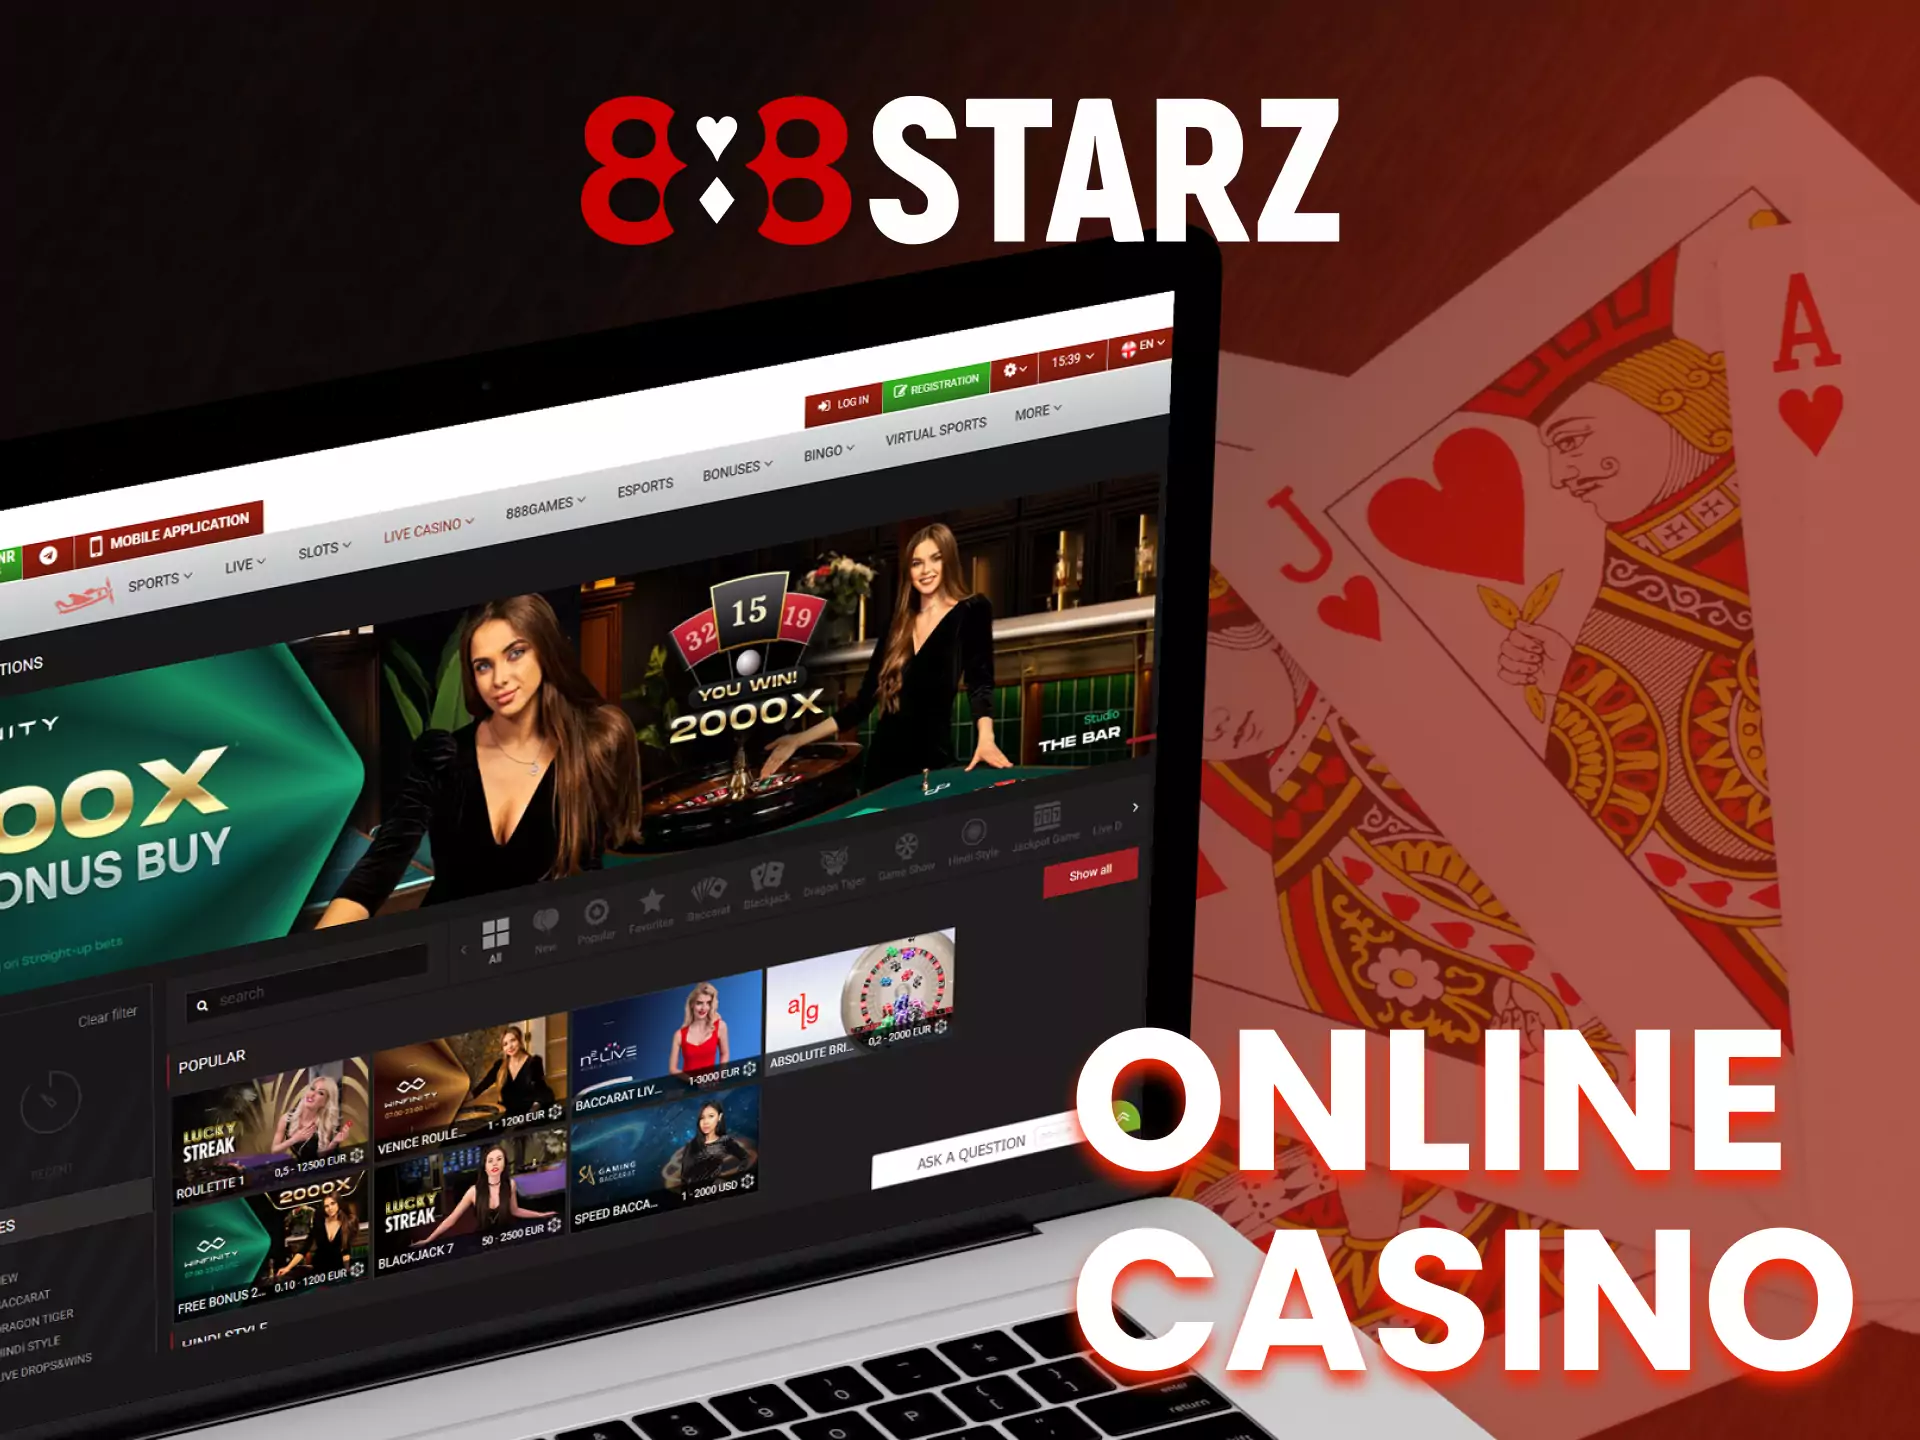 Visit 888starz casino for new emotions.